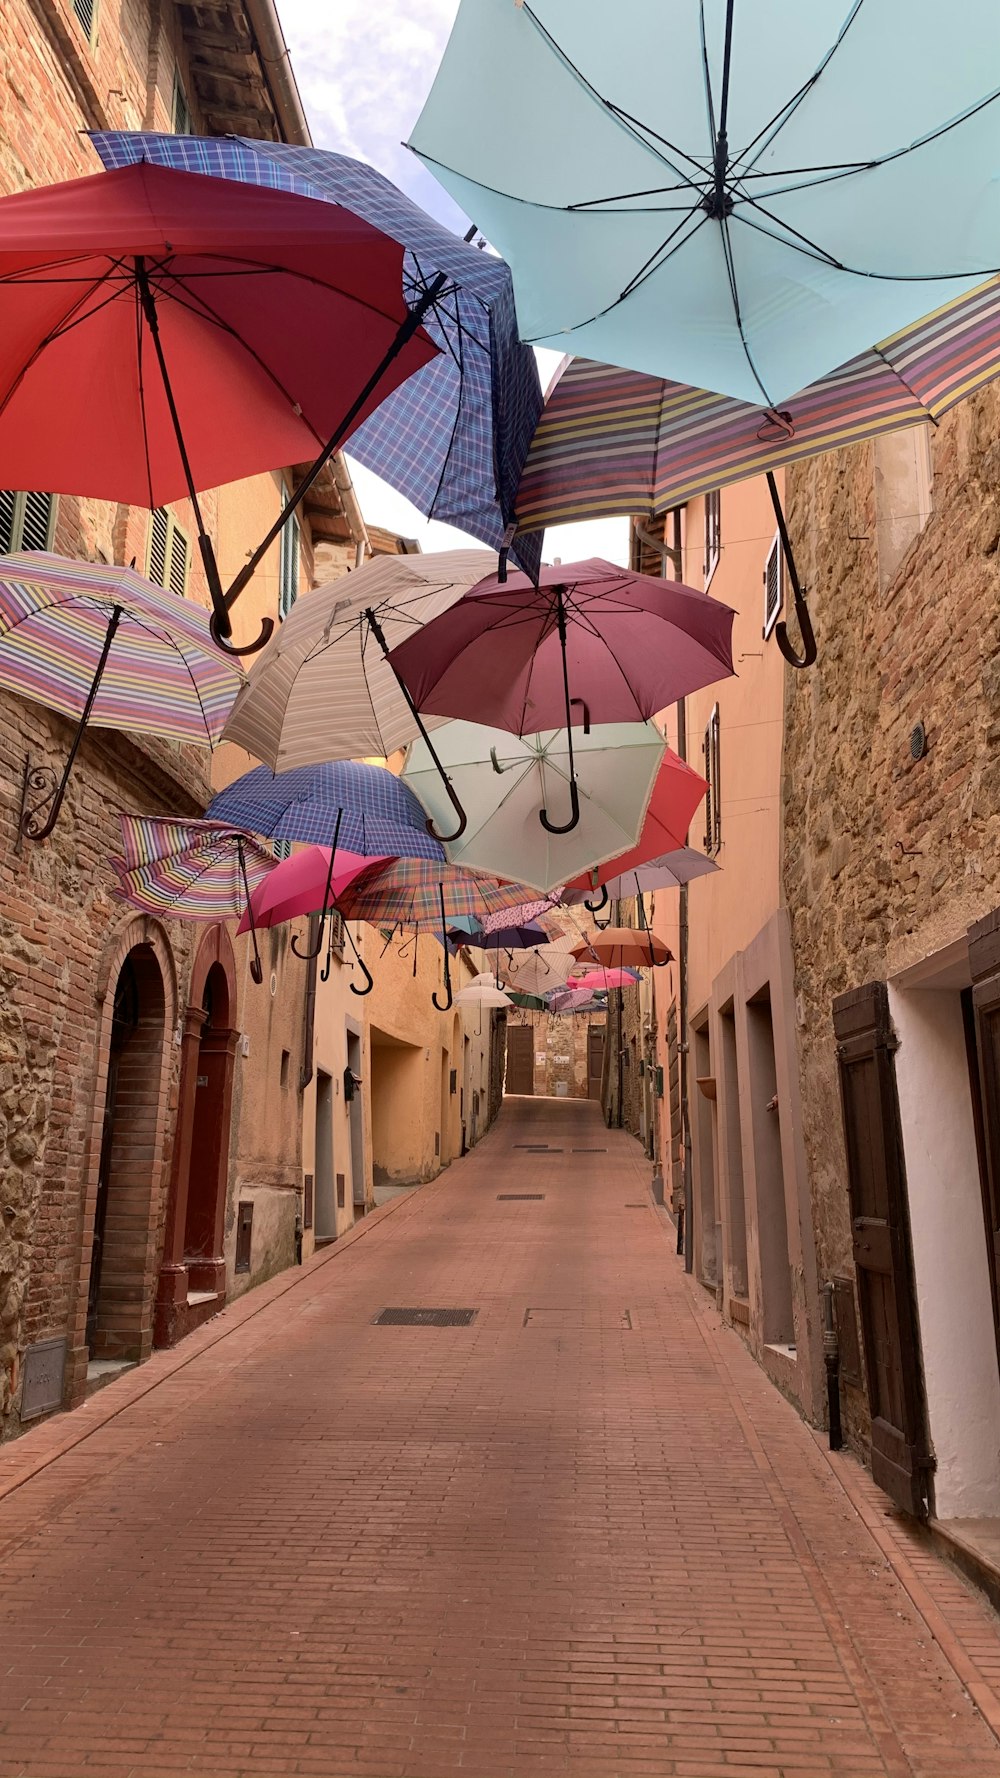 umbrella and umbrella on street during daytime